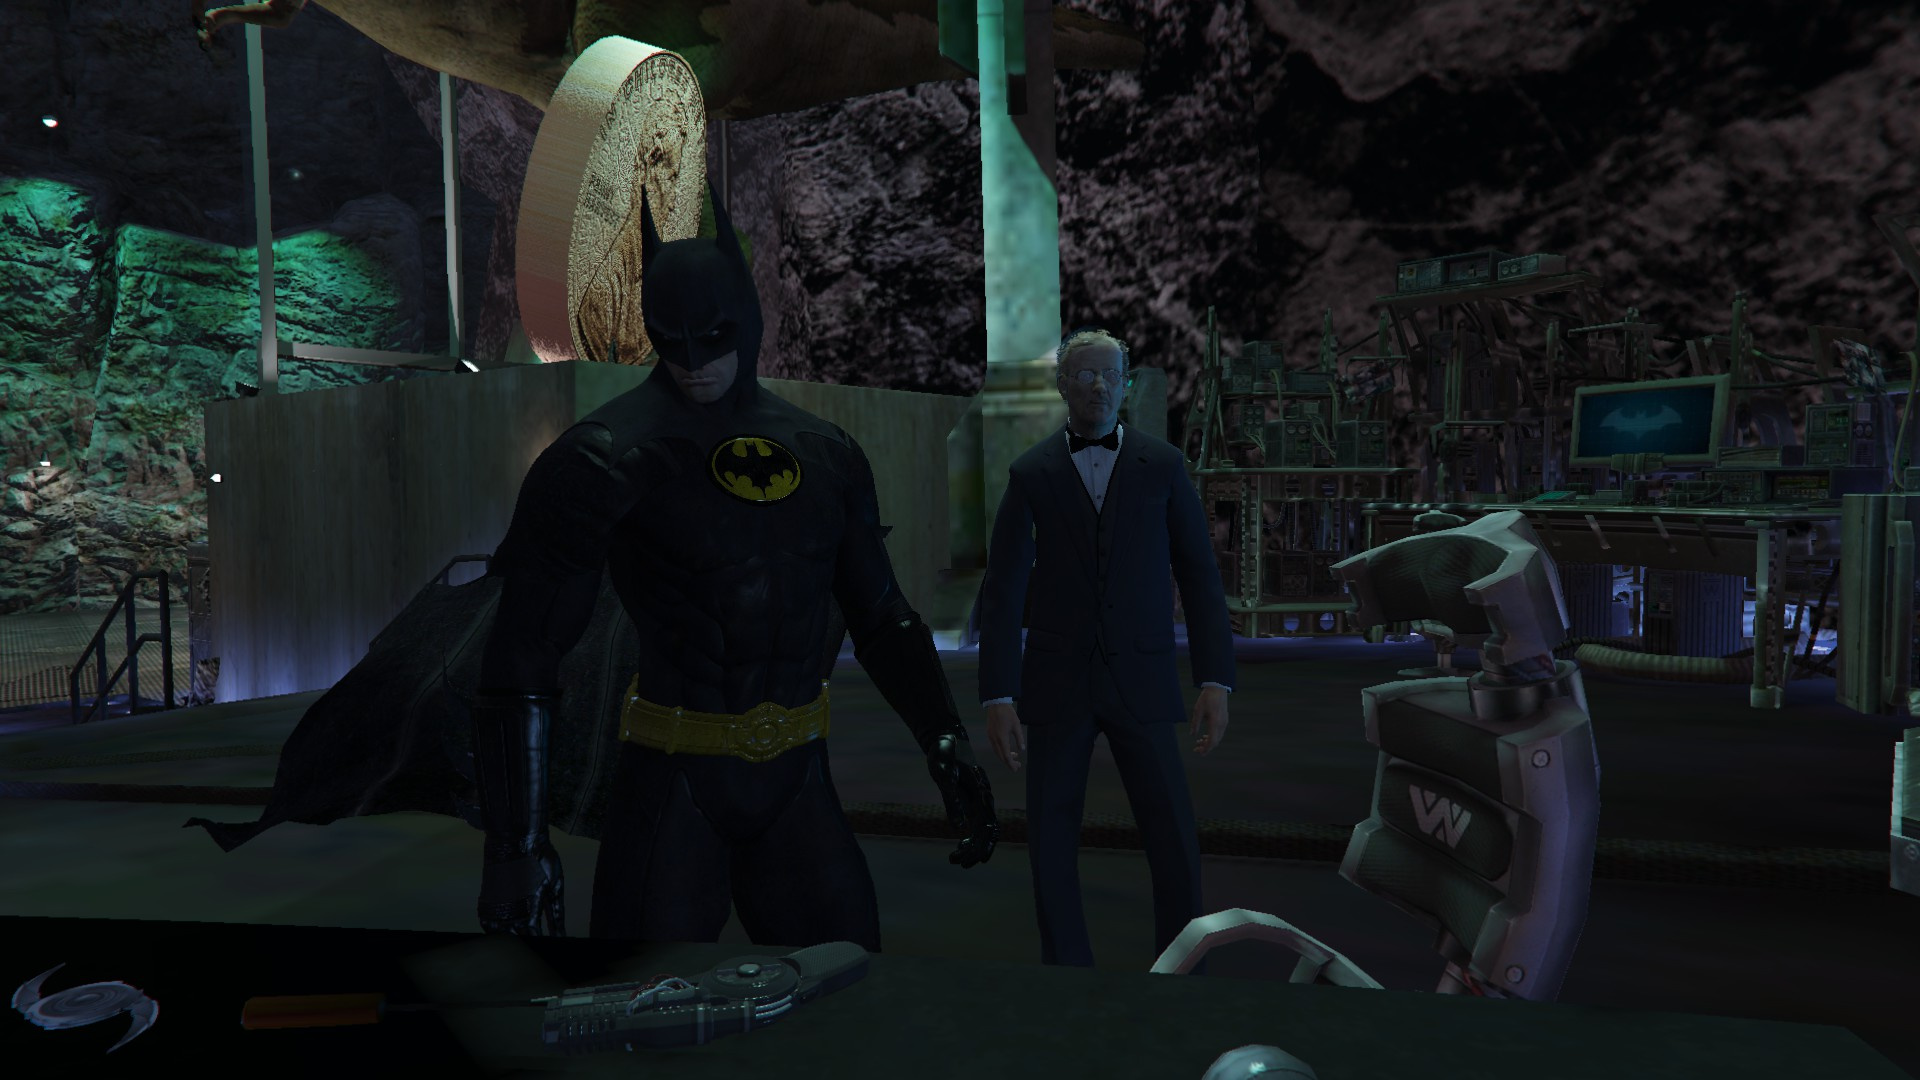 Alfred: Batman Arkham Knight 